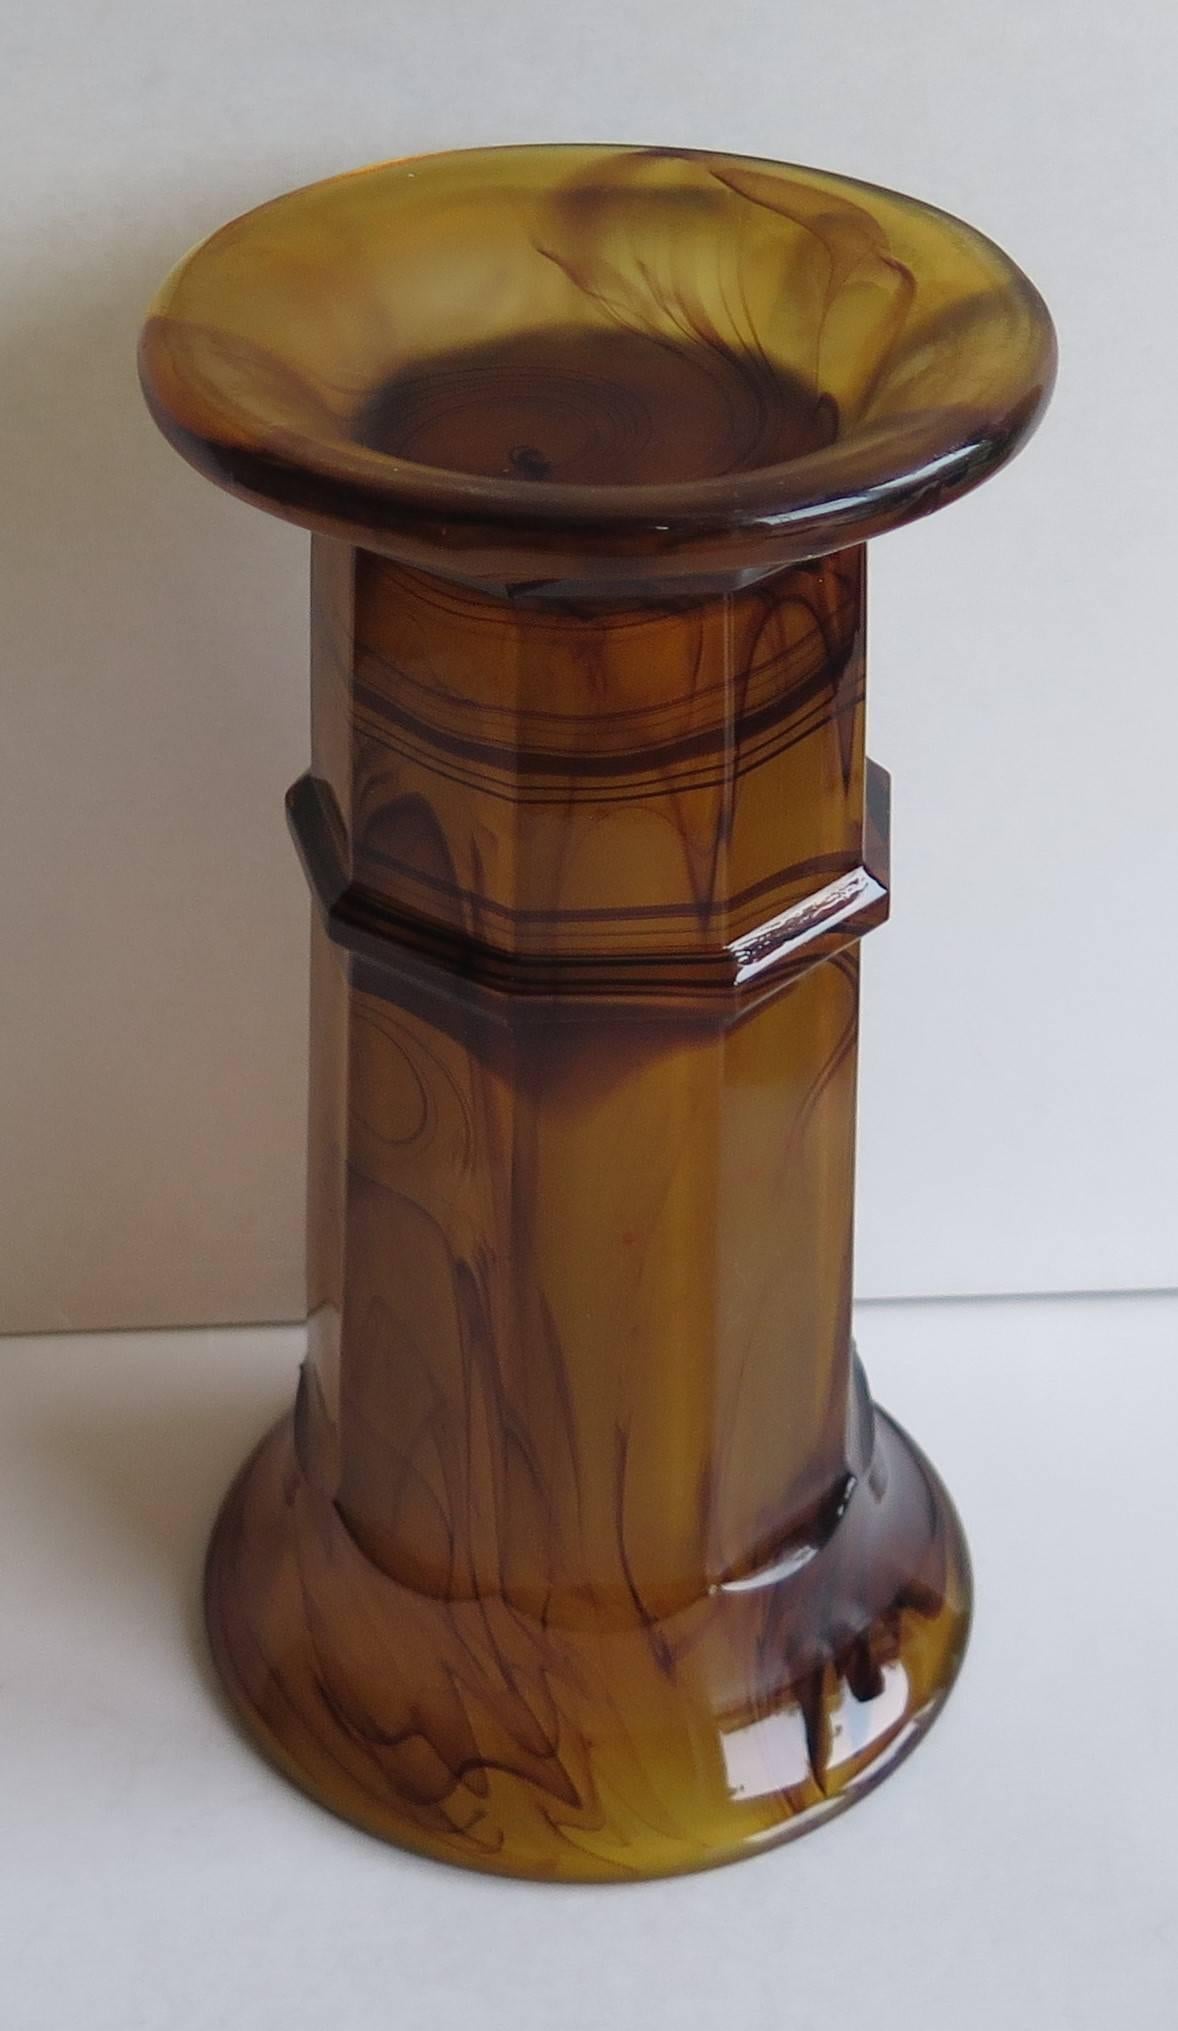 Pressed George Davidson, Cloud Glass Column Vase, Amber, Art Deco Period, circa 1930s